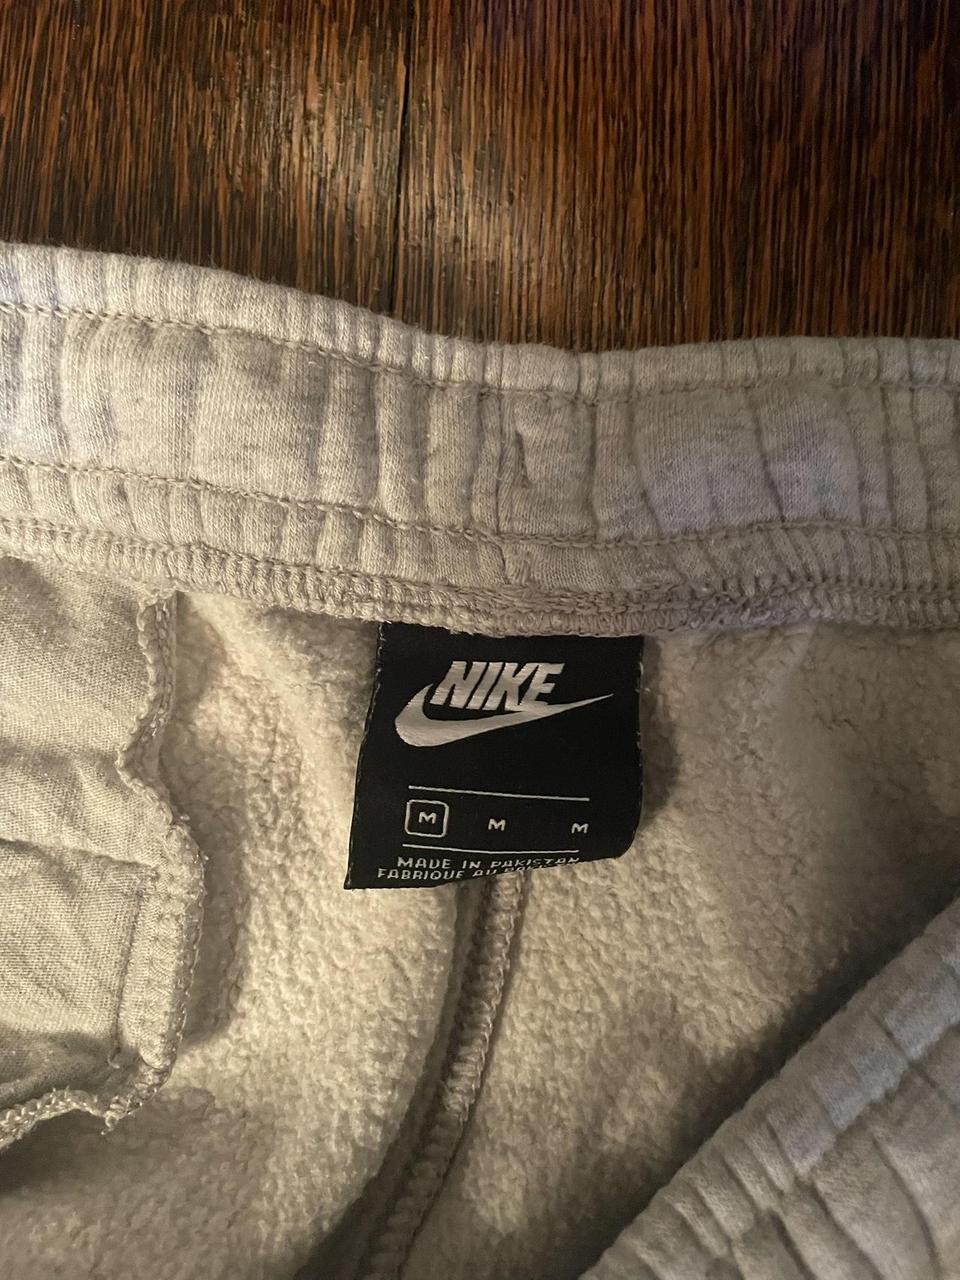 Grey Nike Sweatpants Size M Great... - Depop